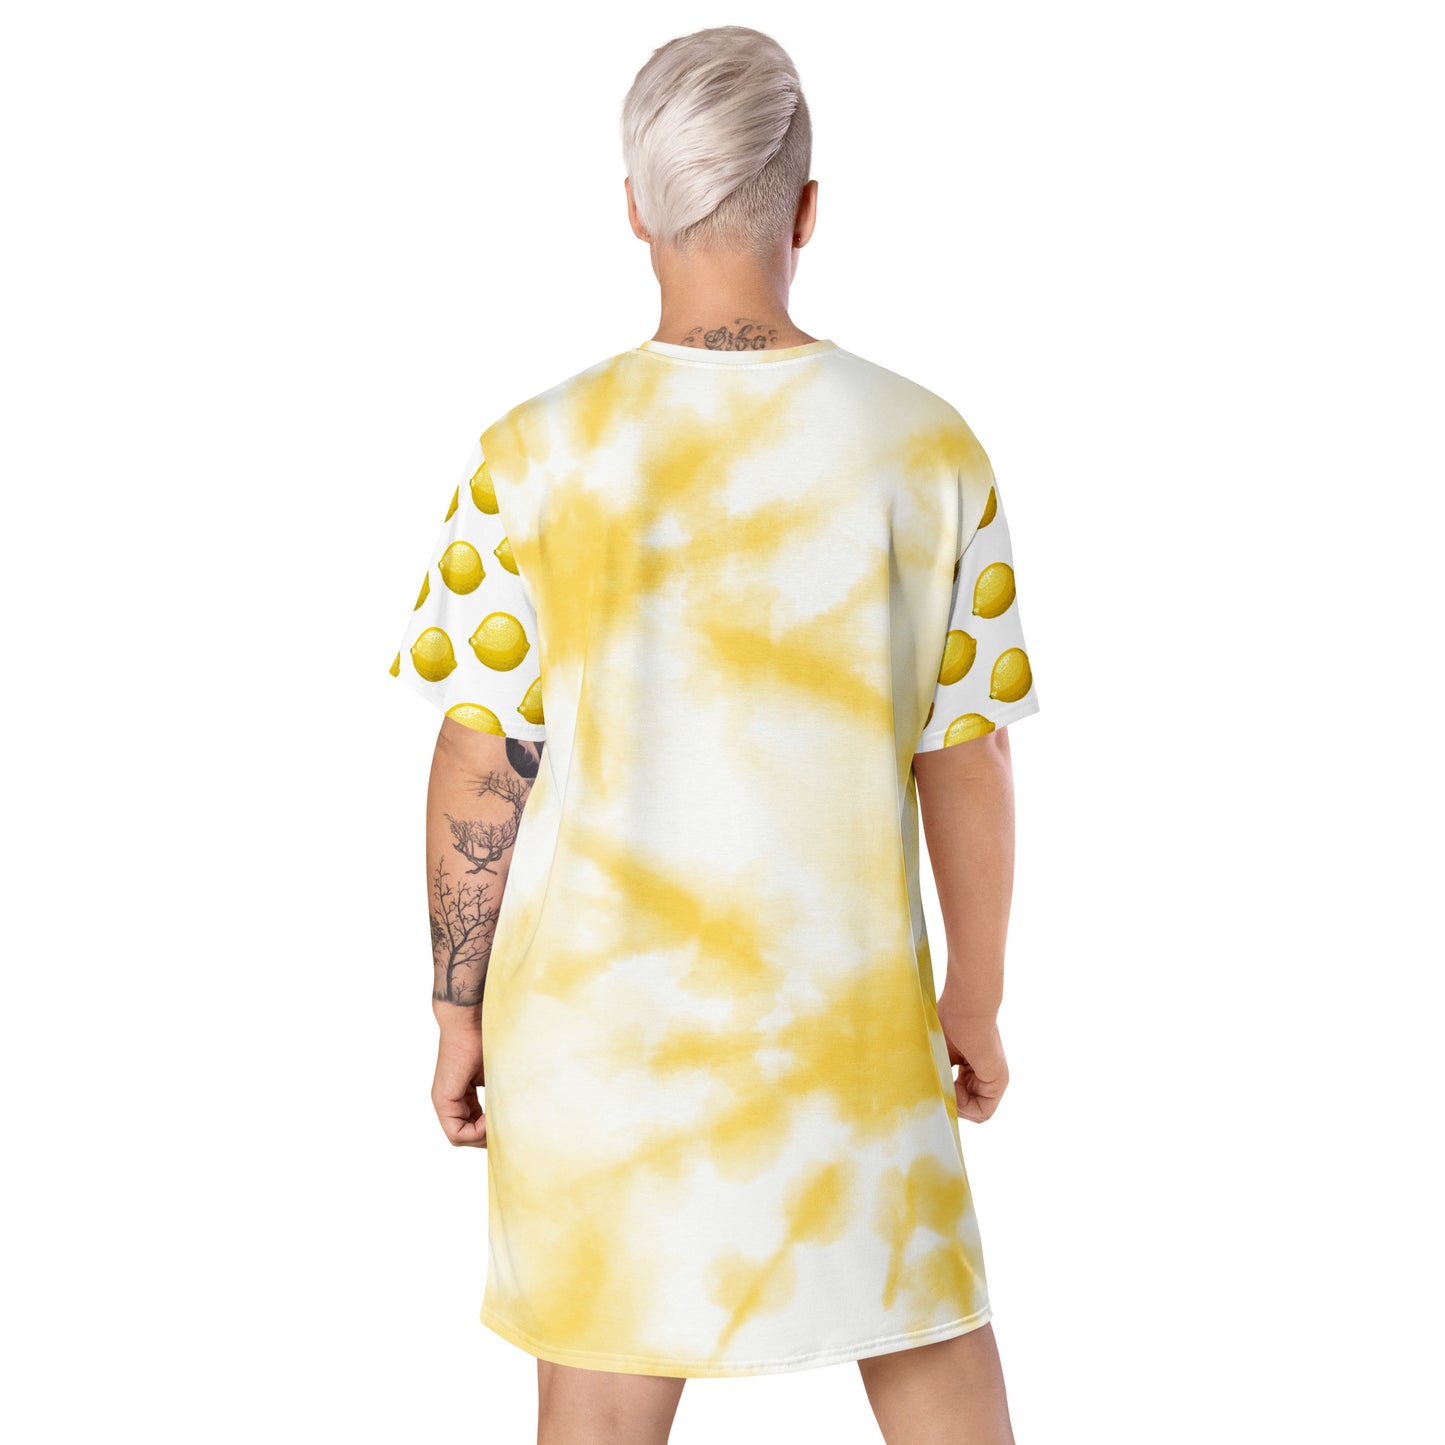 "that lemon dress" - ripe and breedable t-shirt dress